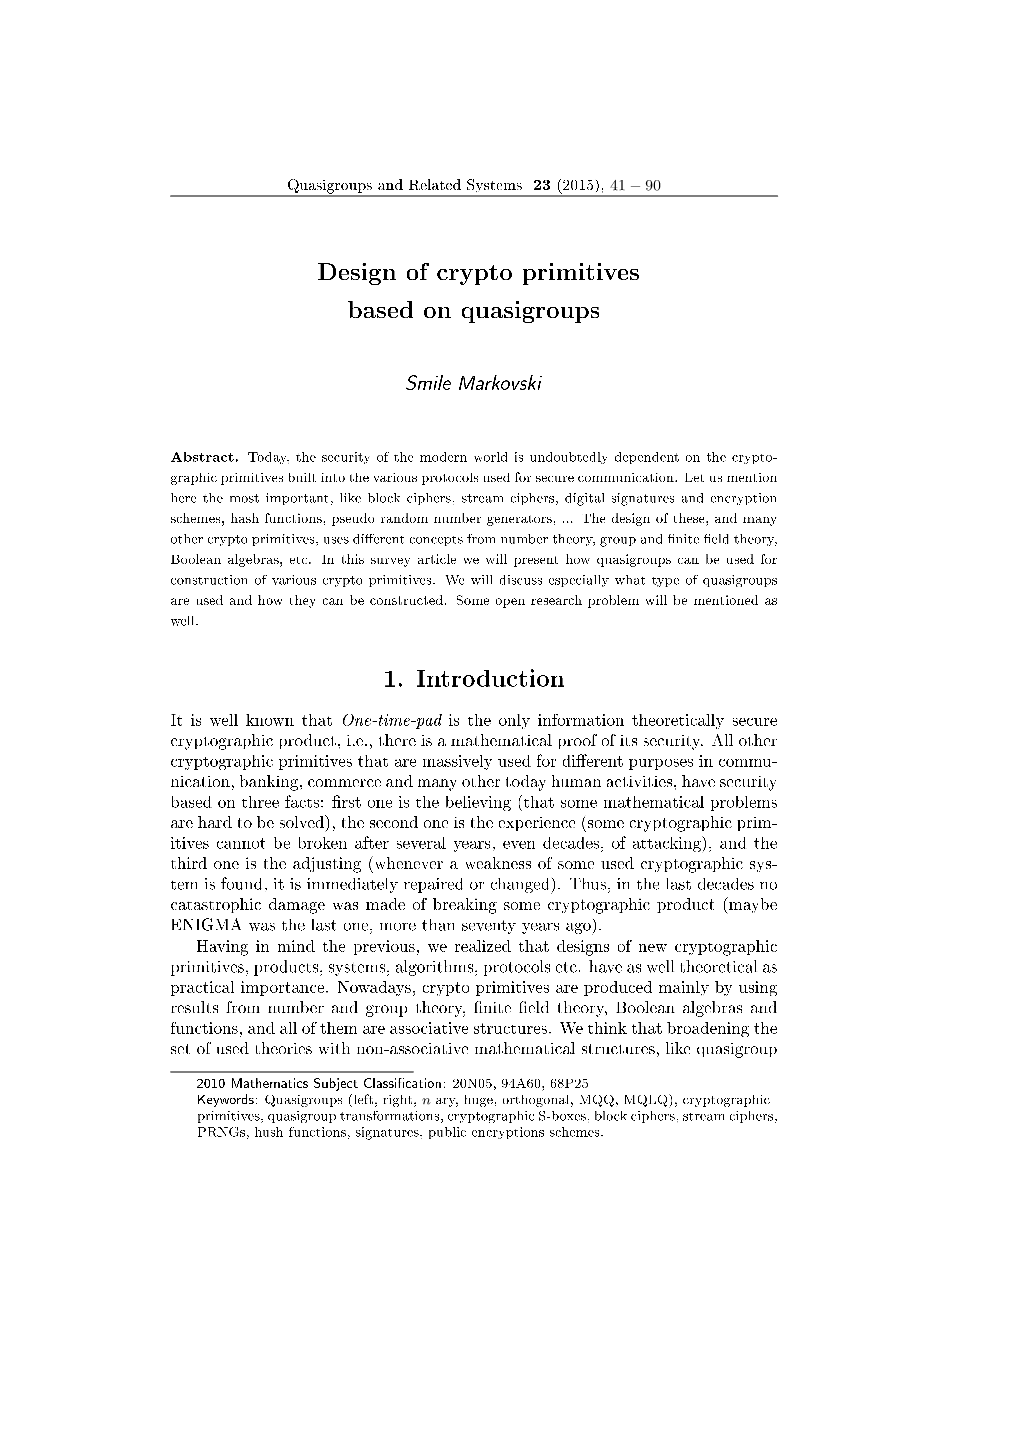 Design of Crypto Primitives Based on Quasigroups 1. Introduction